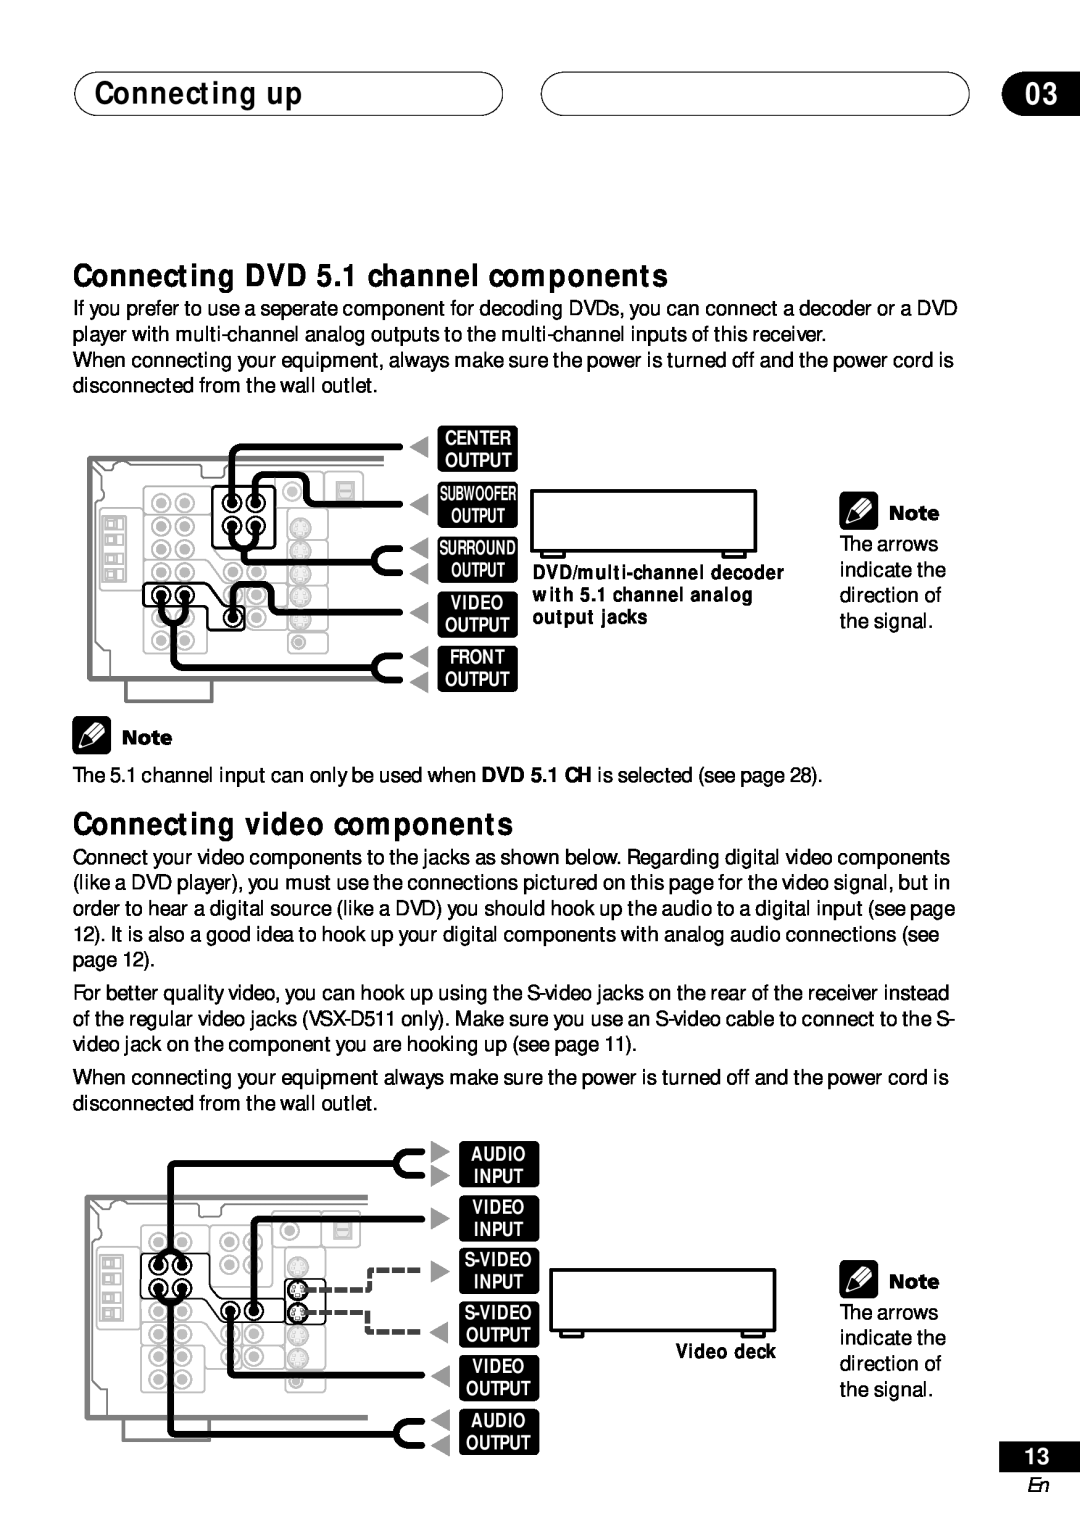 Pioneer VSX-D511, VSX-D41 manual Connecting DVD 5.1 channel components, Connecting video components, Connecting up 